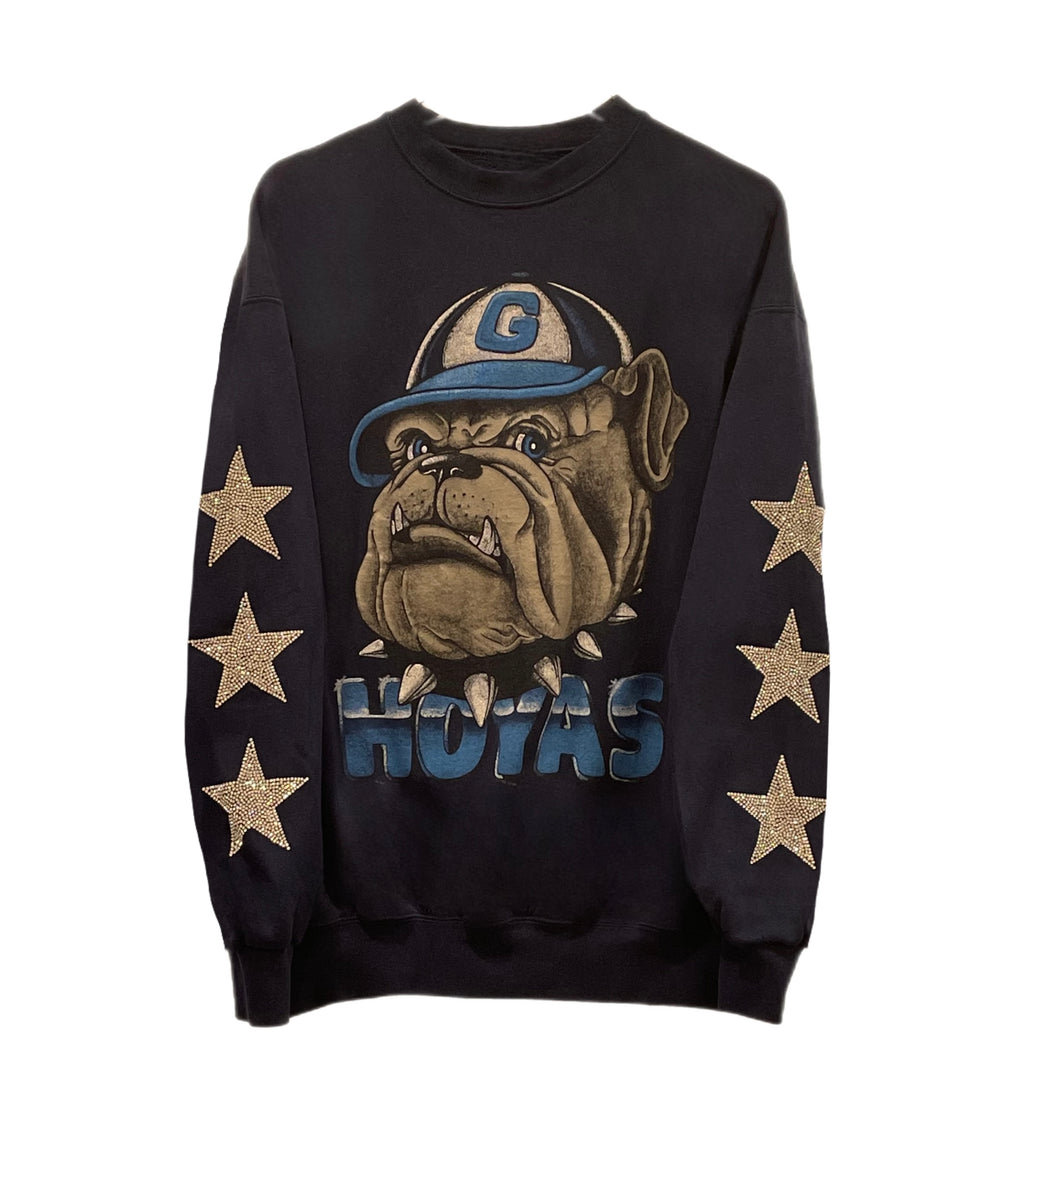 Georgetown University, Hoyas One of a KIND Vintage Sweatshirt with Three Crystal Star Design